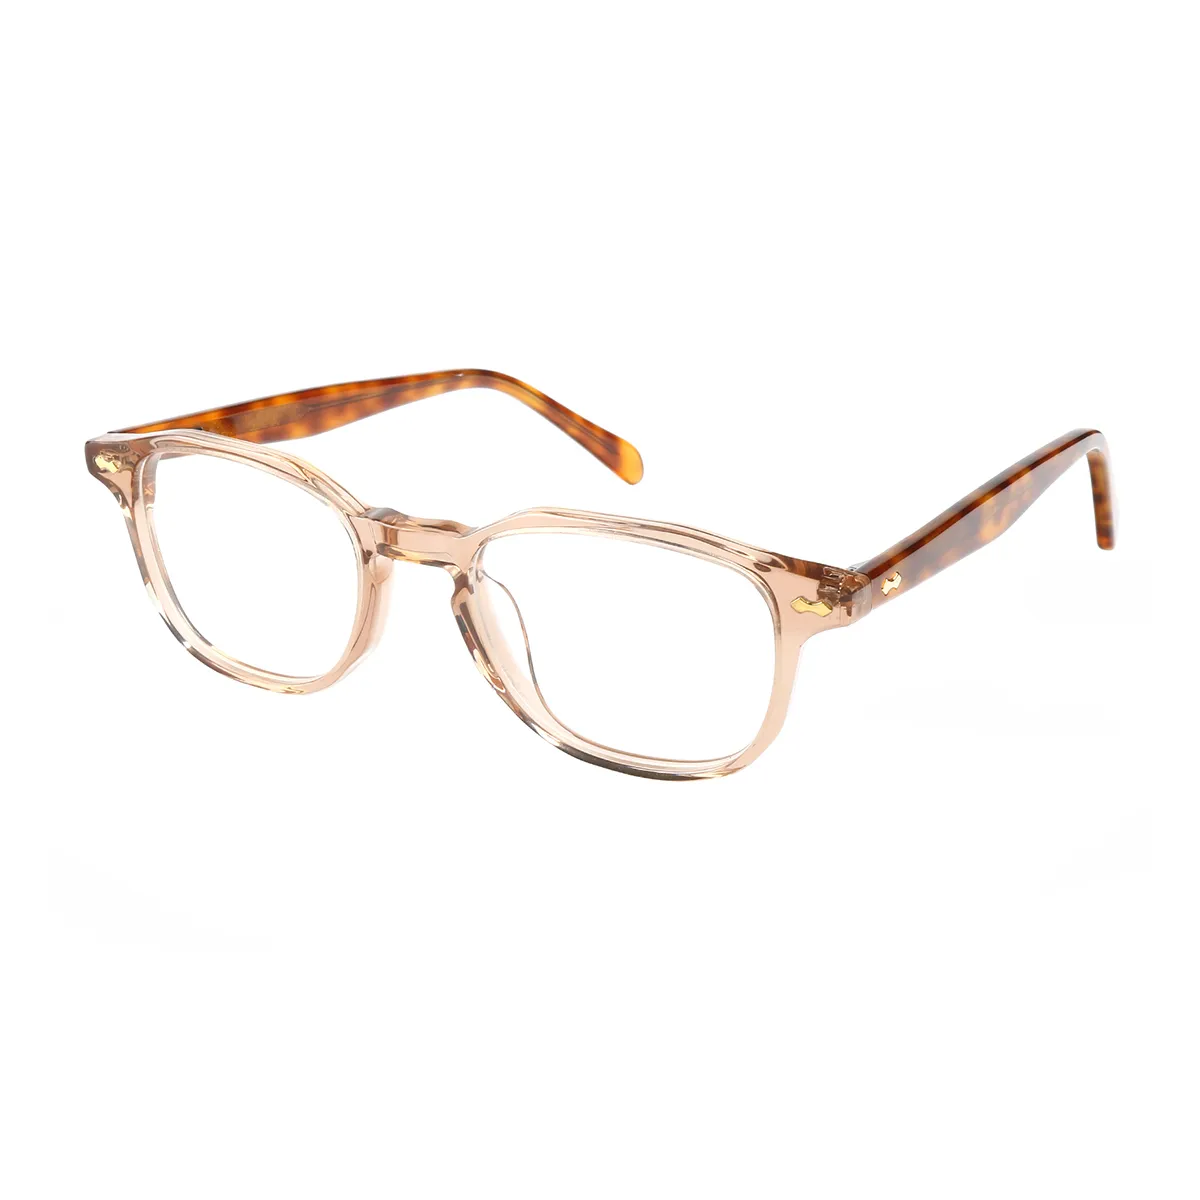 Allais - Square Brown Glasses for Men & Women - EFE